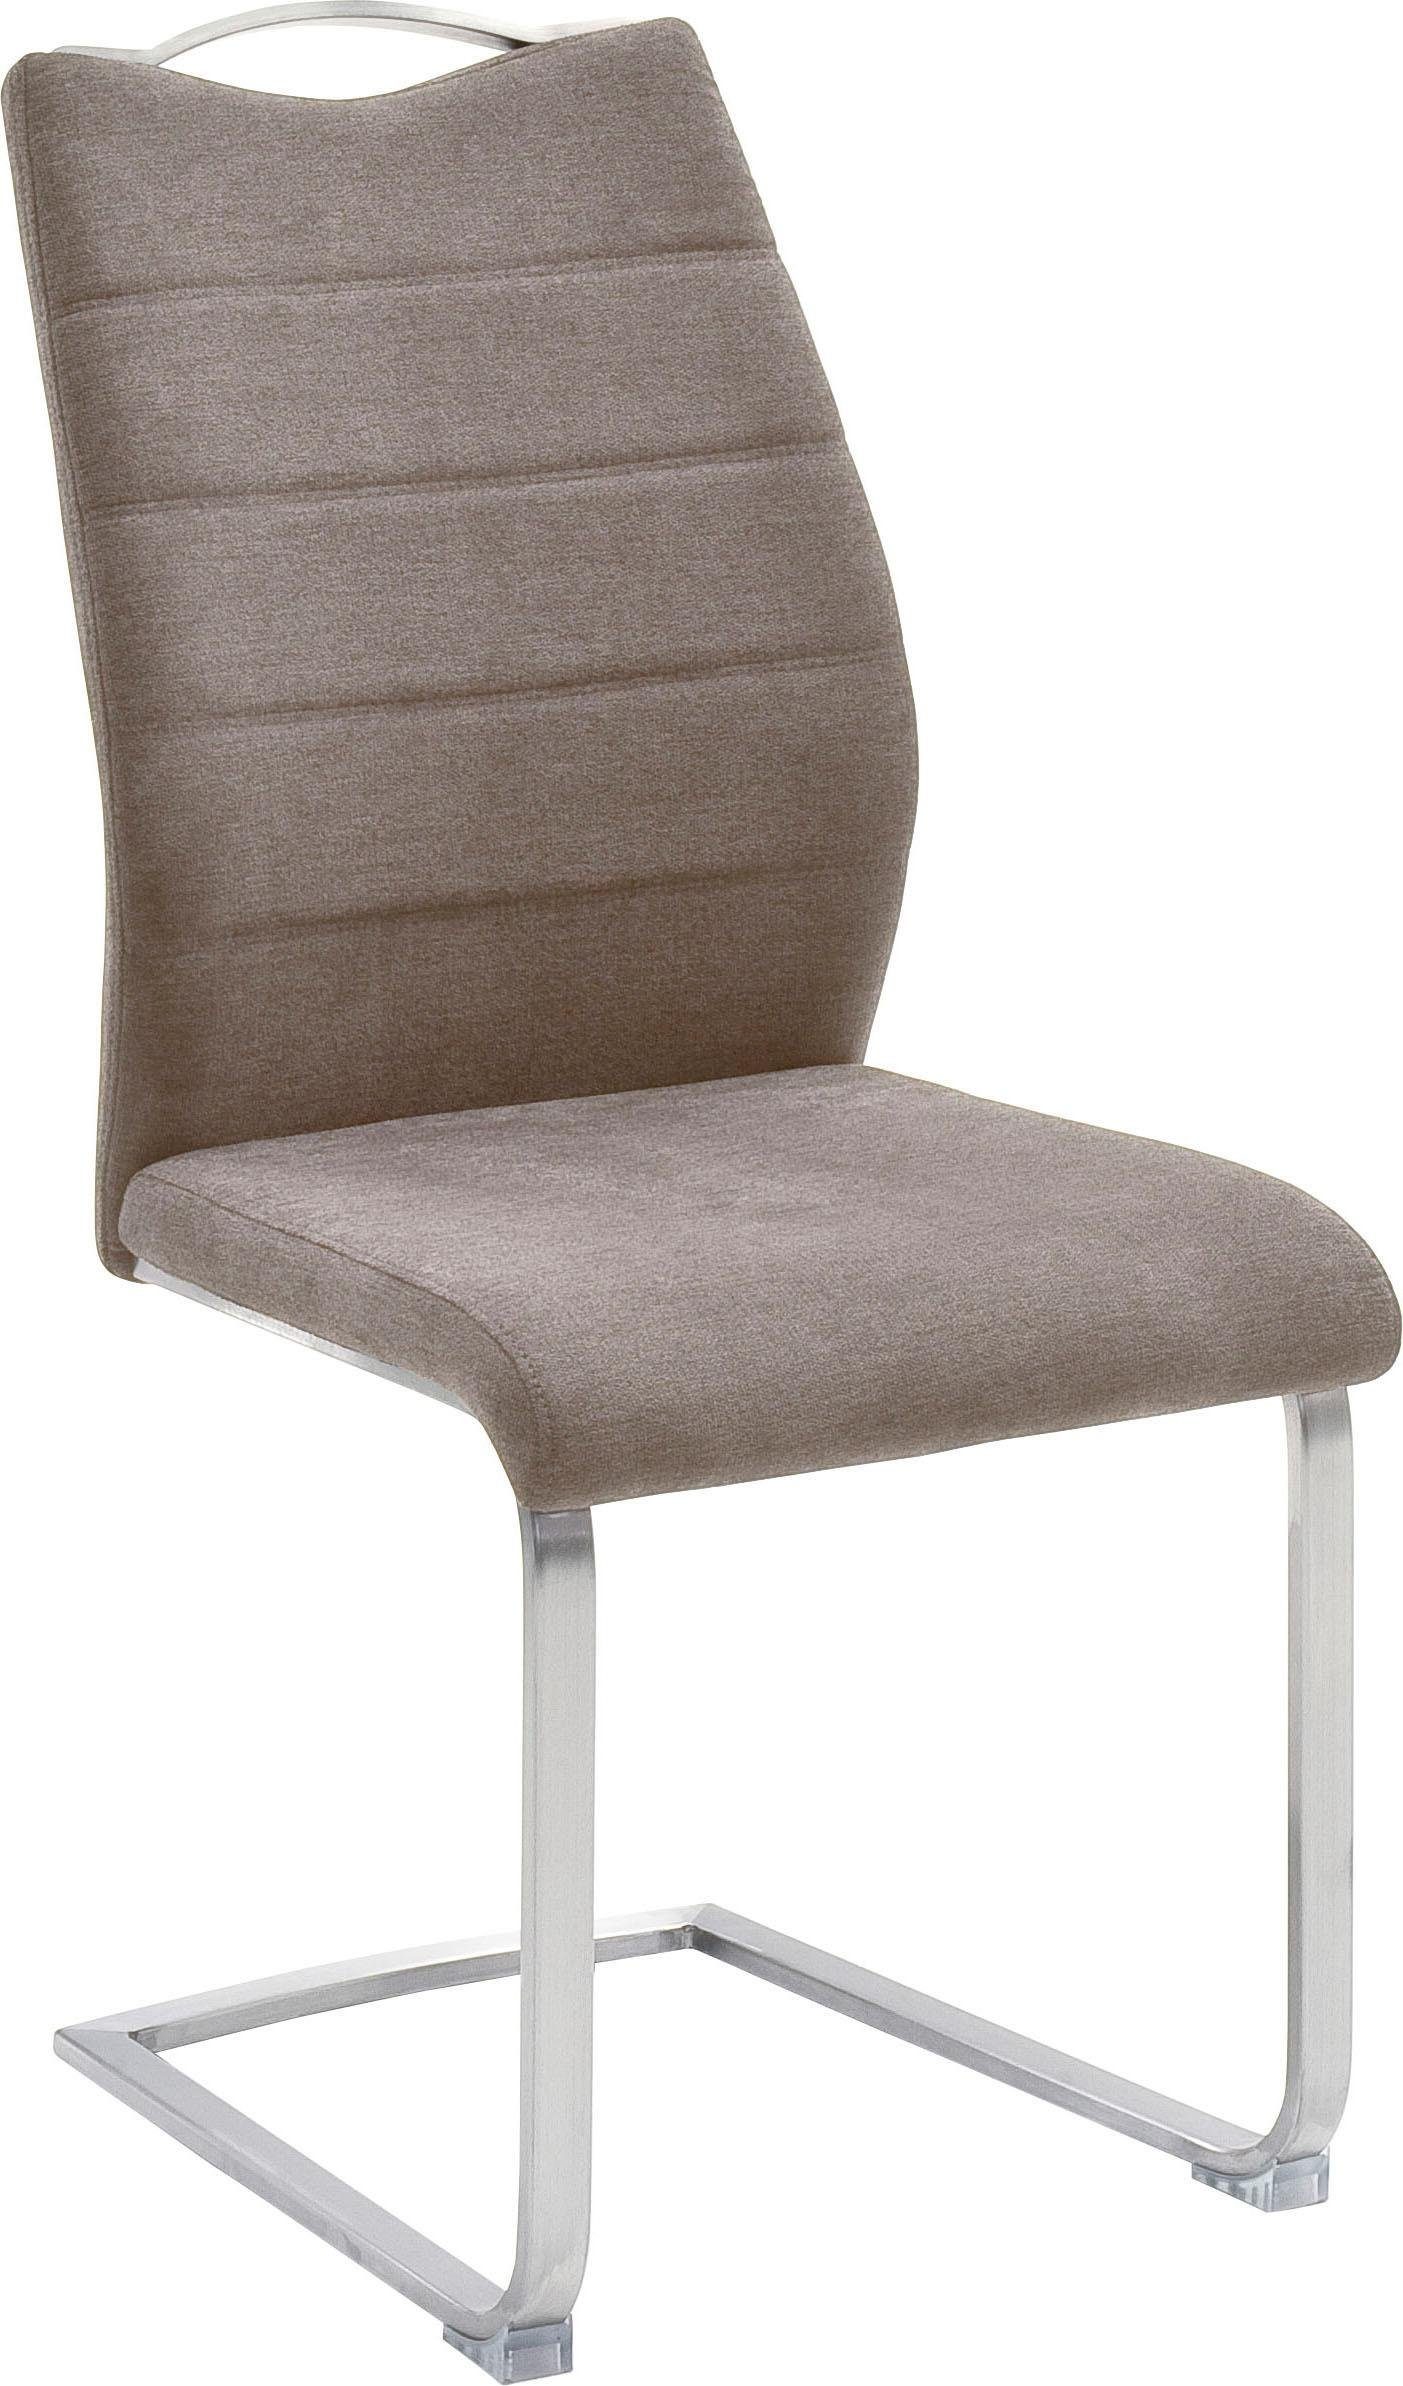 MCA furniture bis Kg 2 | Ferrera St), 140 Freischwinger belastbar (Set, Cappuccino Stuhl Cappuccino